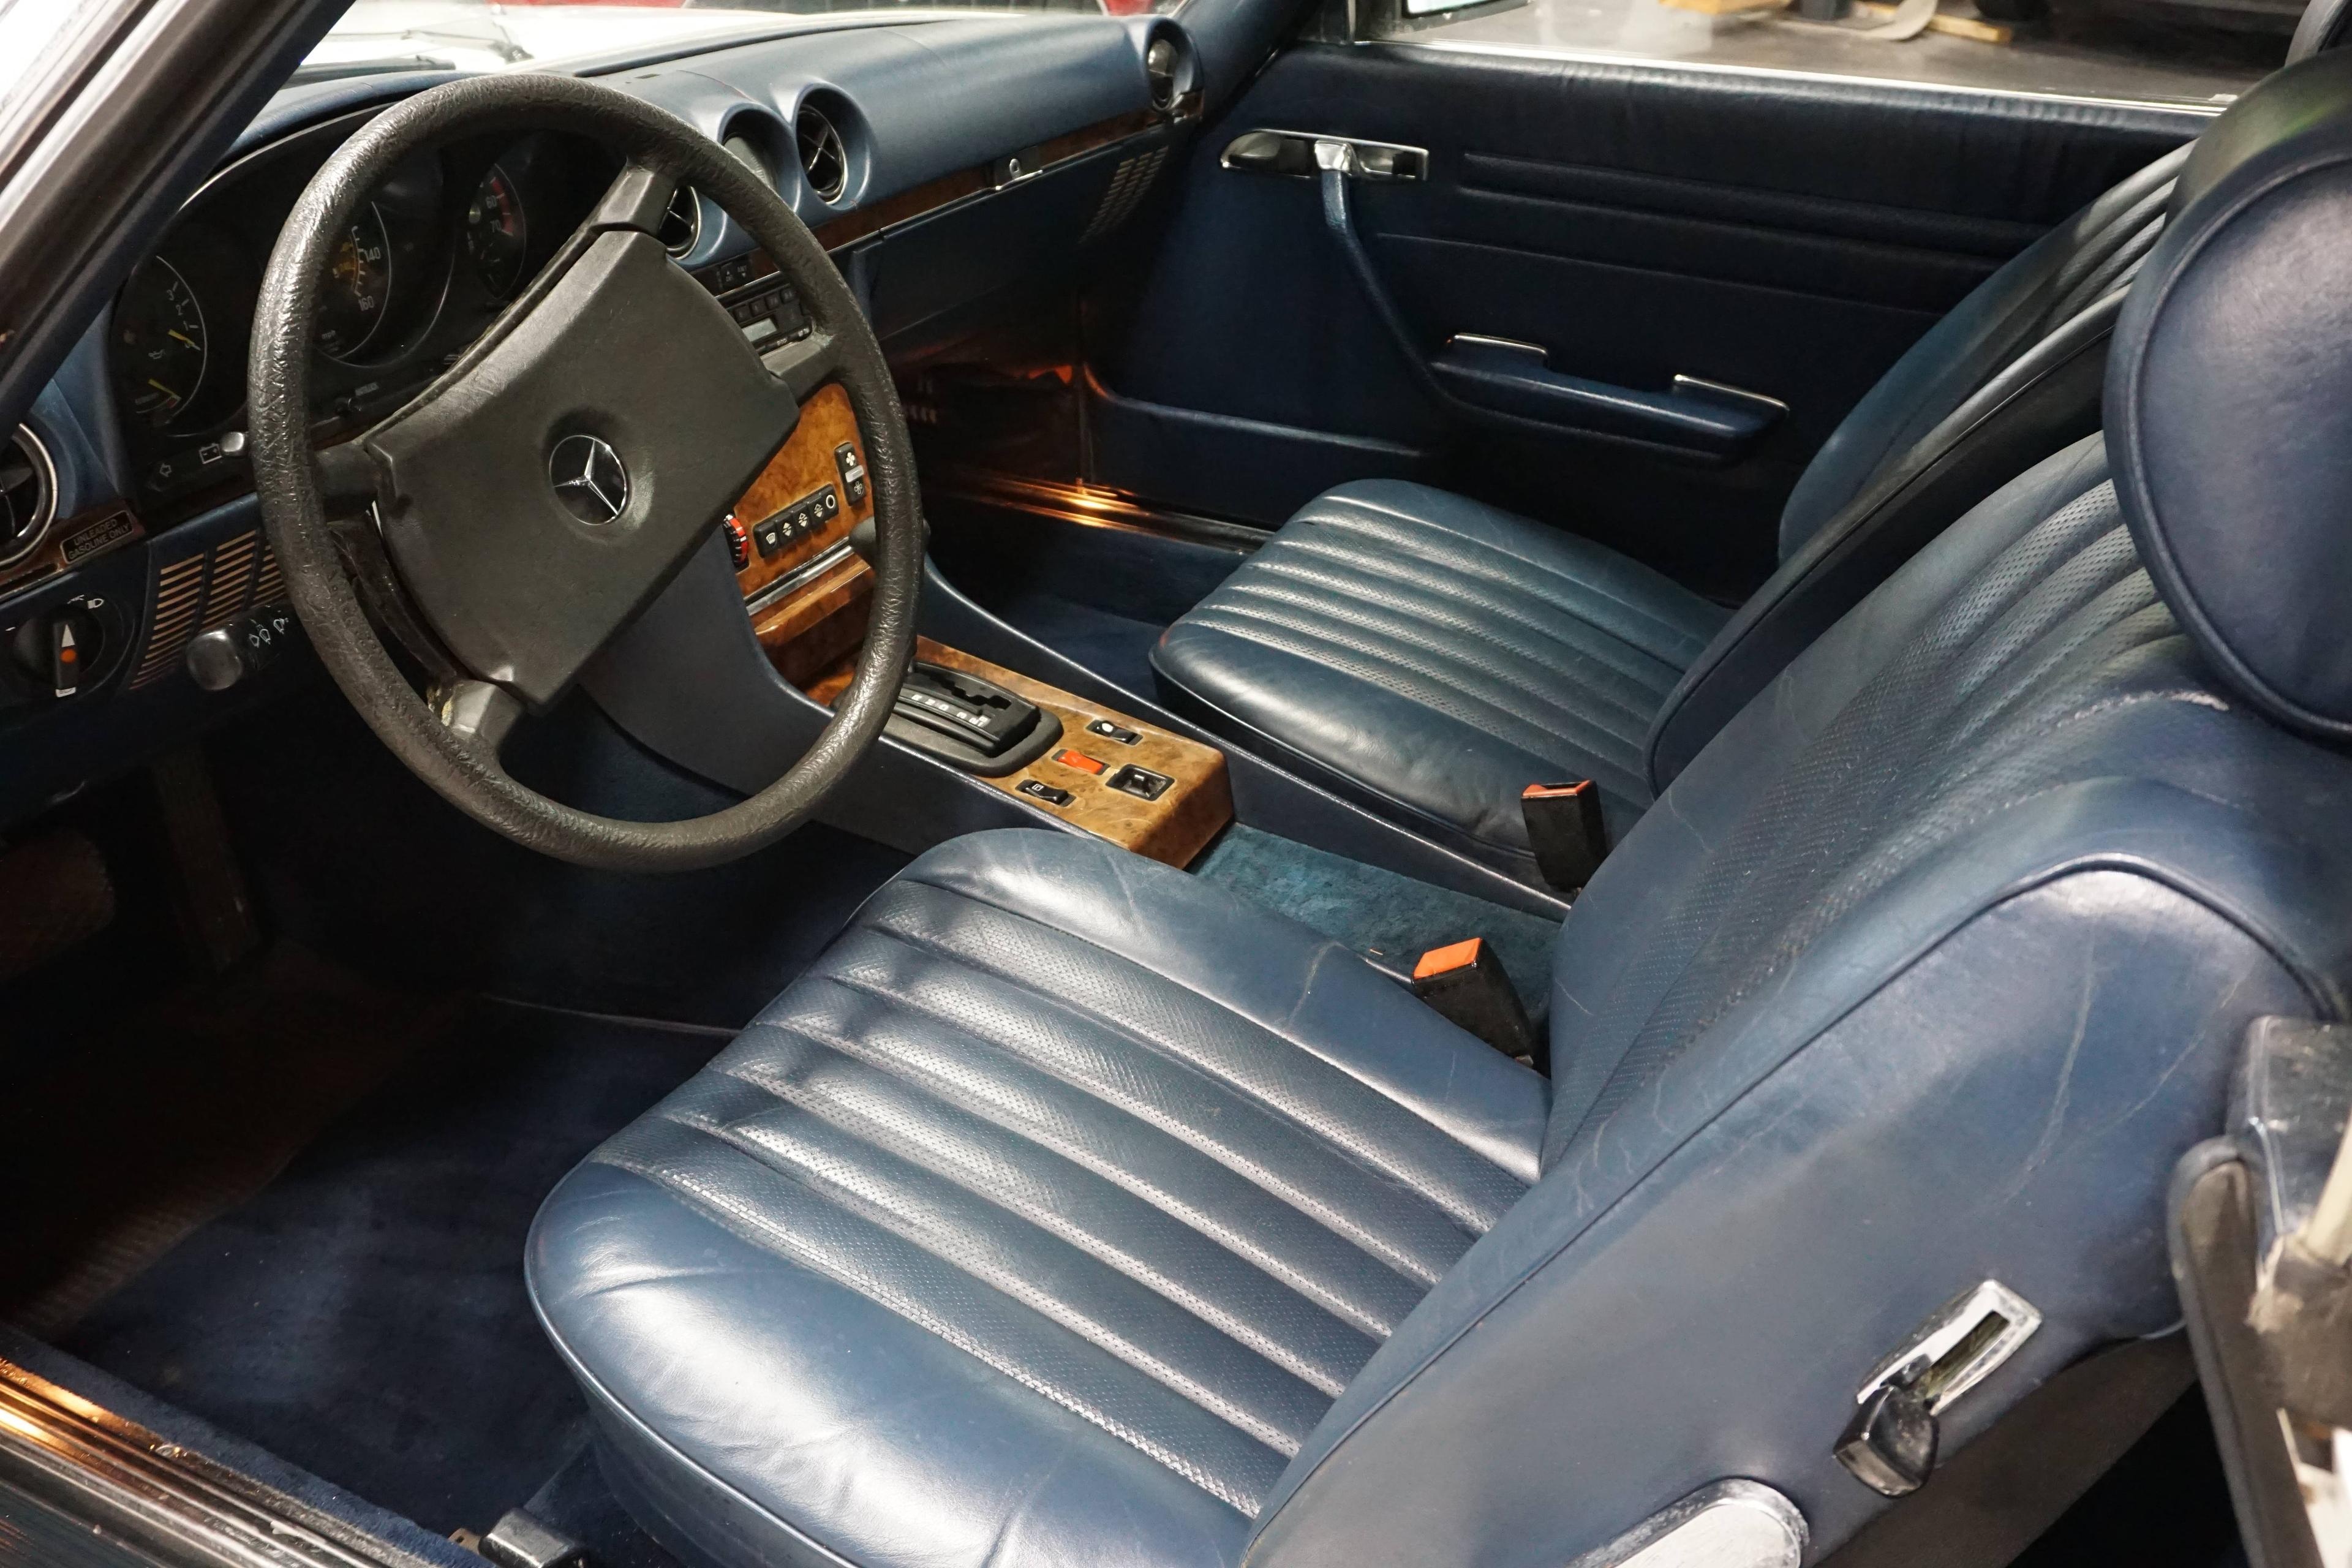 1985 Mercedes-Benz 380SL Convertible. 3.8 liter V8 engine. Automatic transm